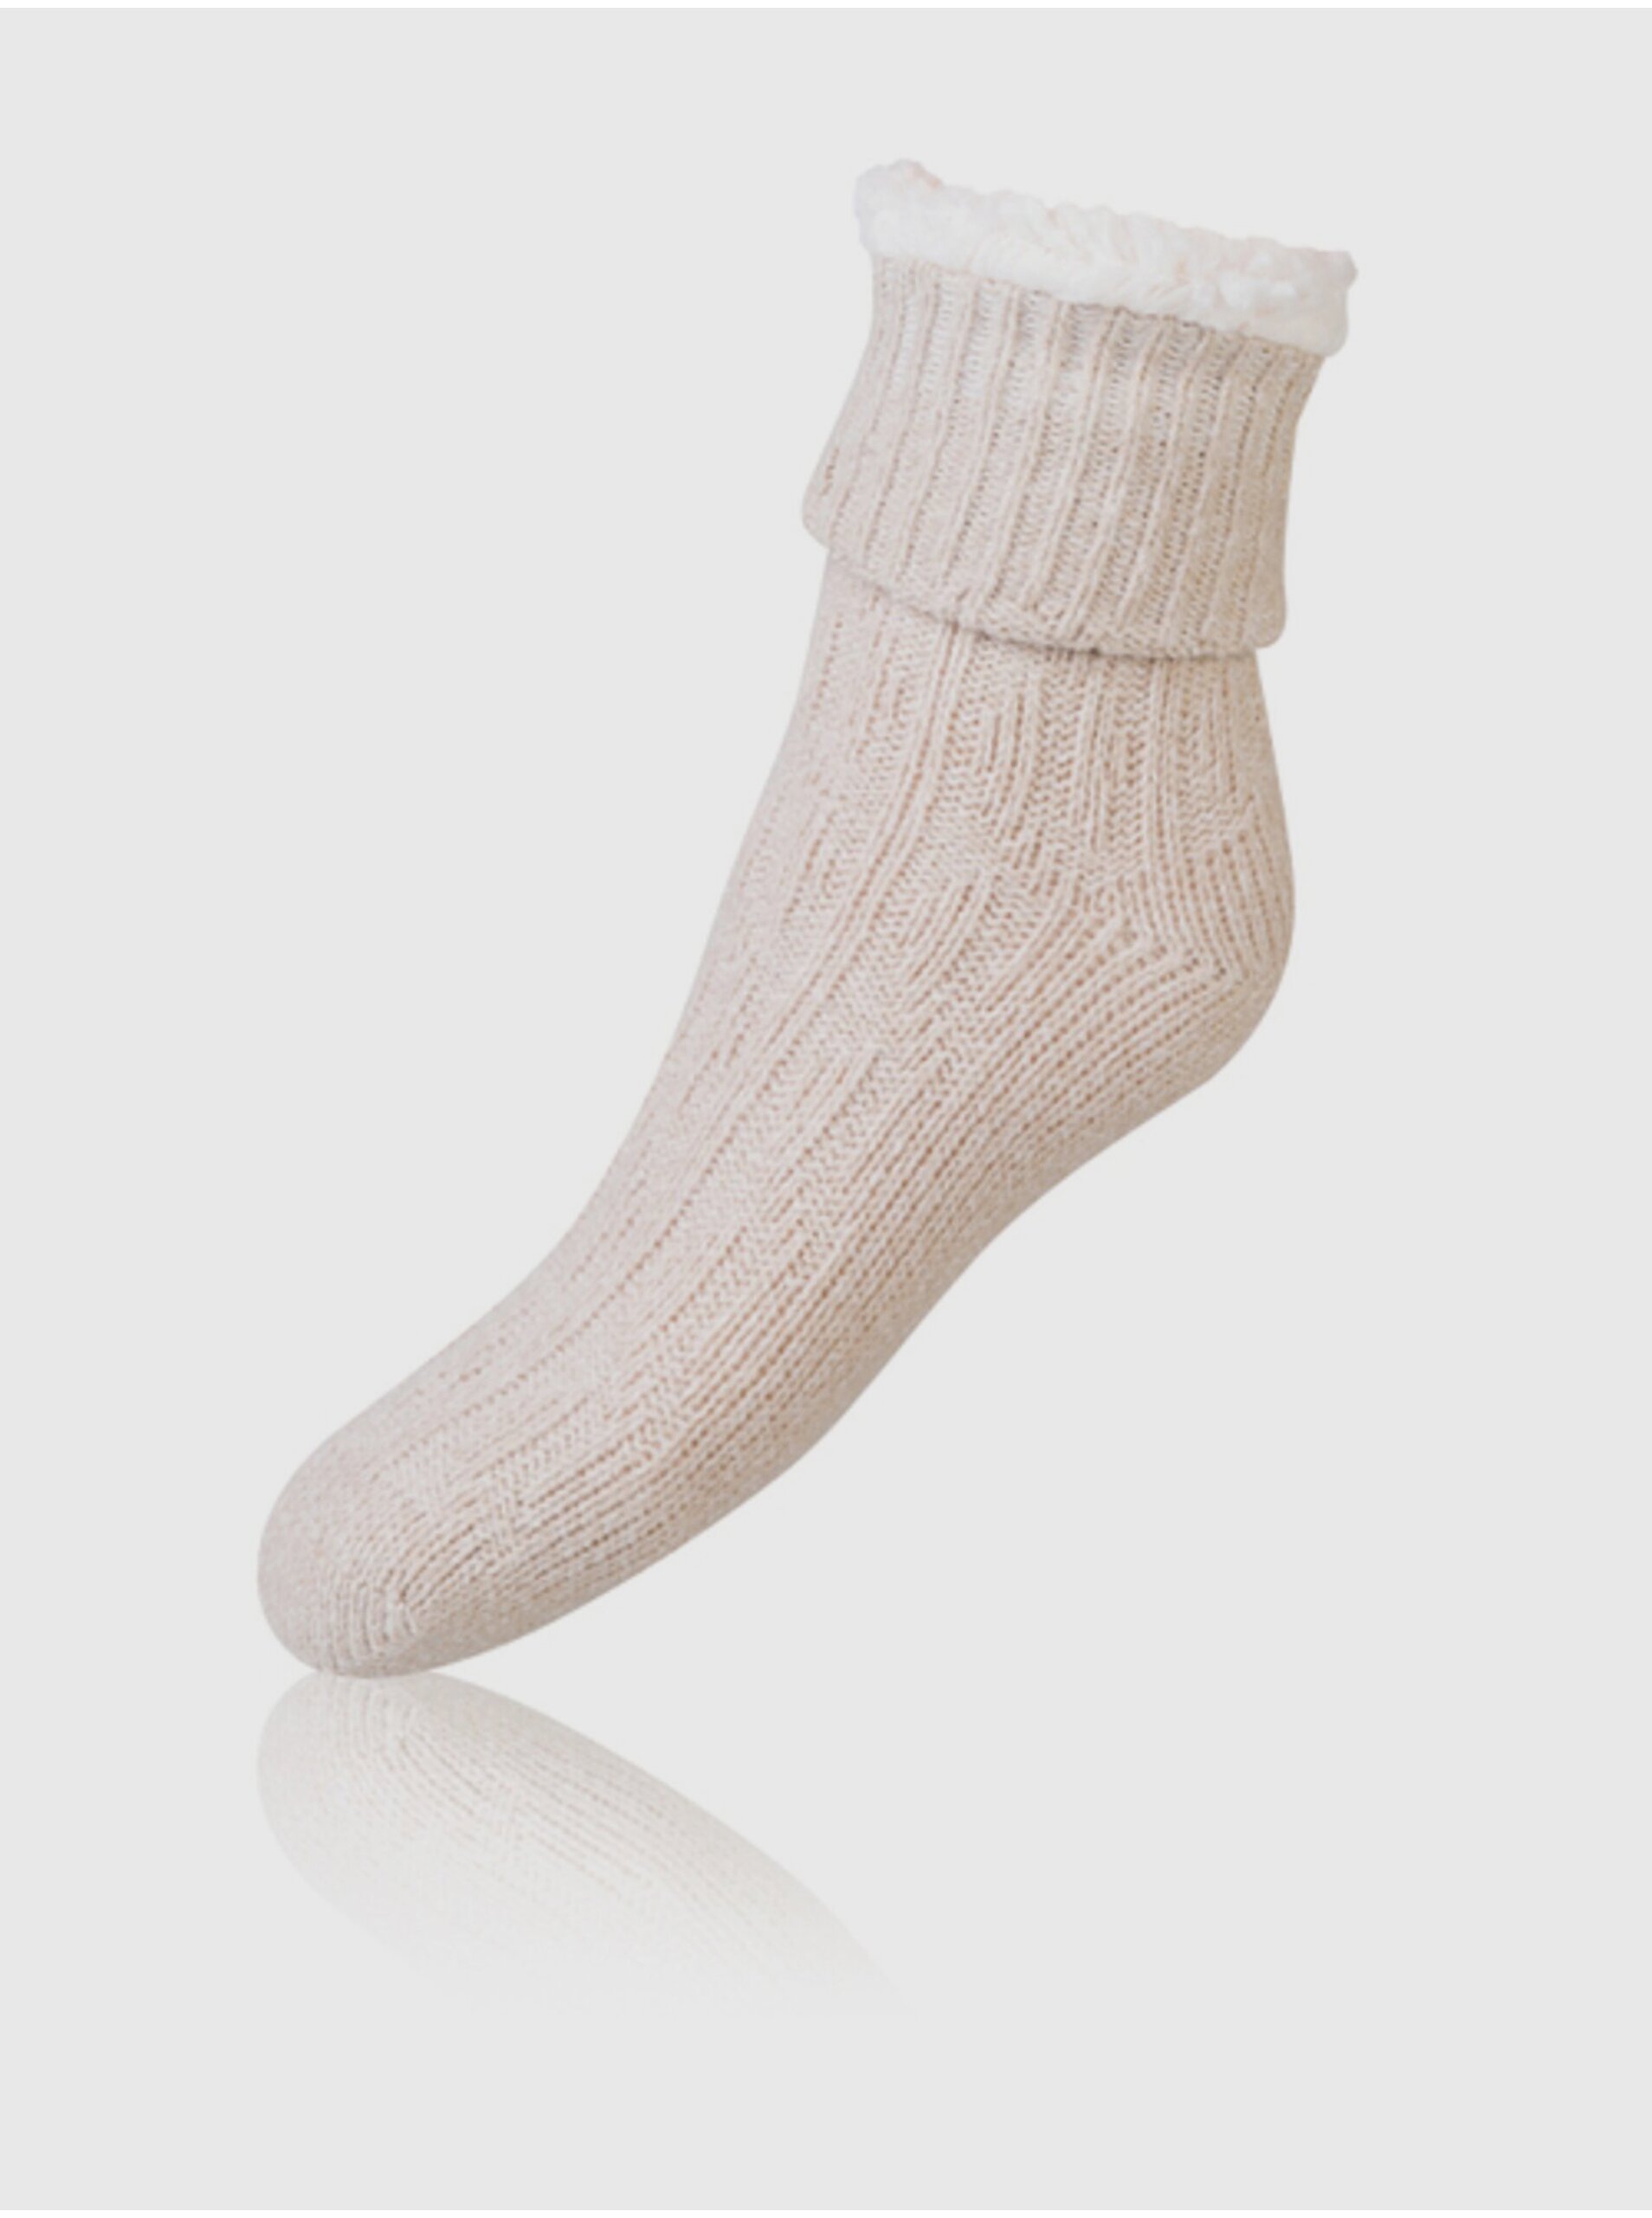 E-shop Béžové dámské extrémně teplé ponožky BELLINDA Extra Warm